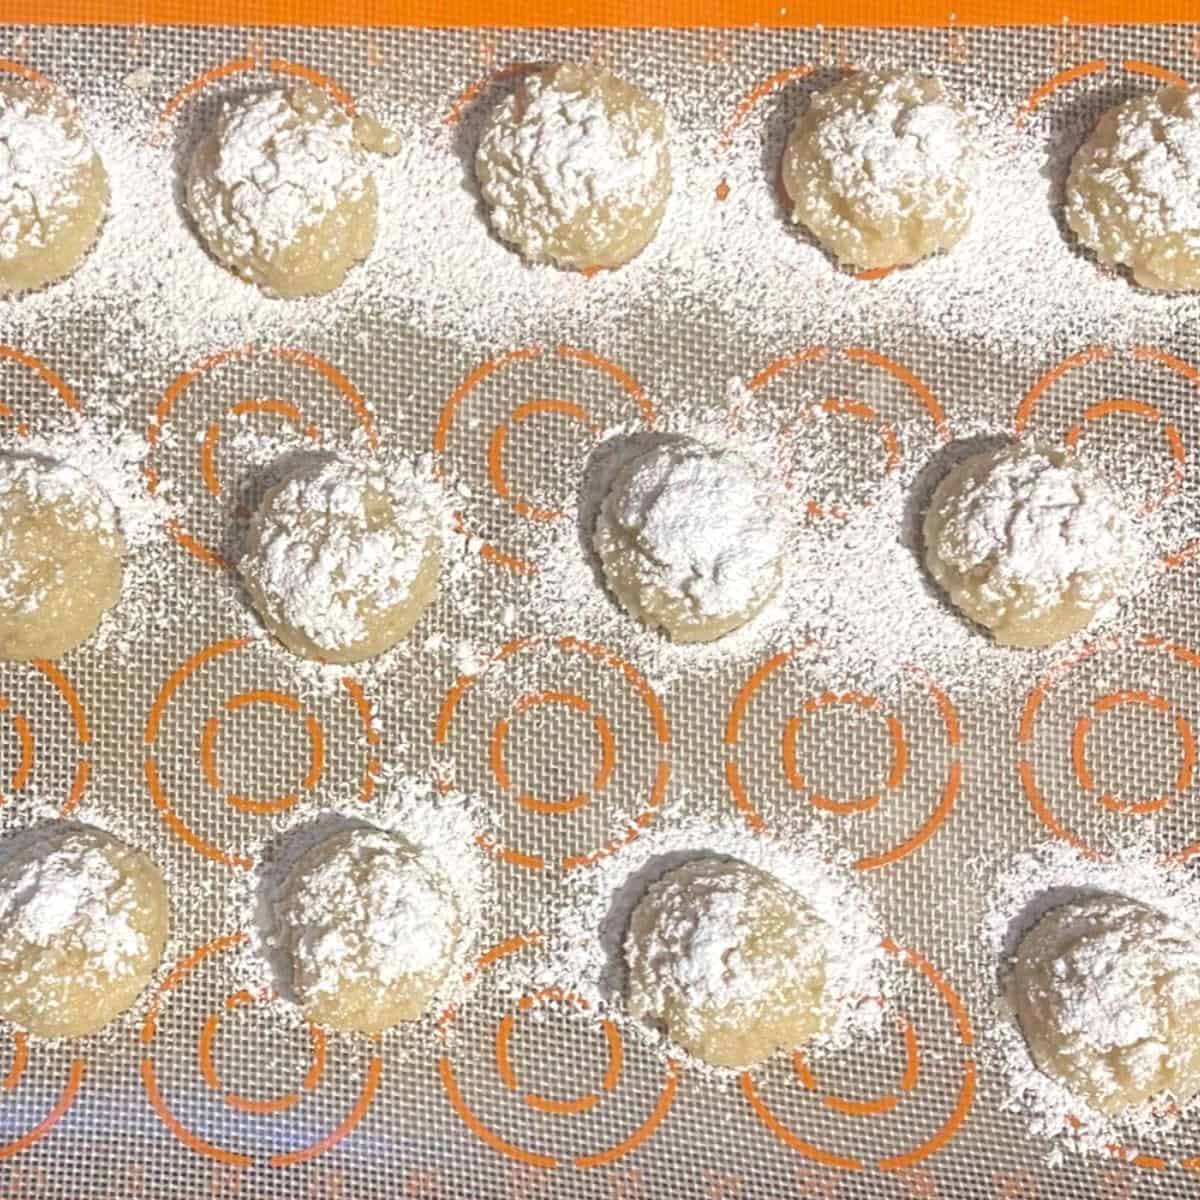 Vegan amaretti cookie dough balls on baking sheet dusted with powdered sugar.